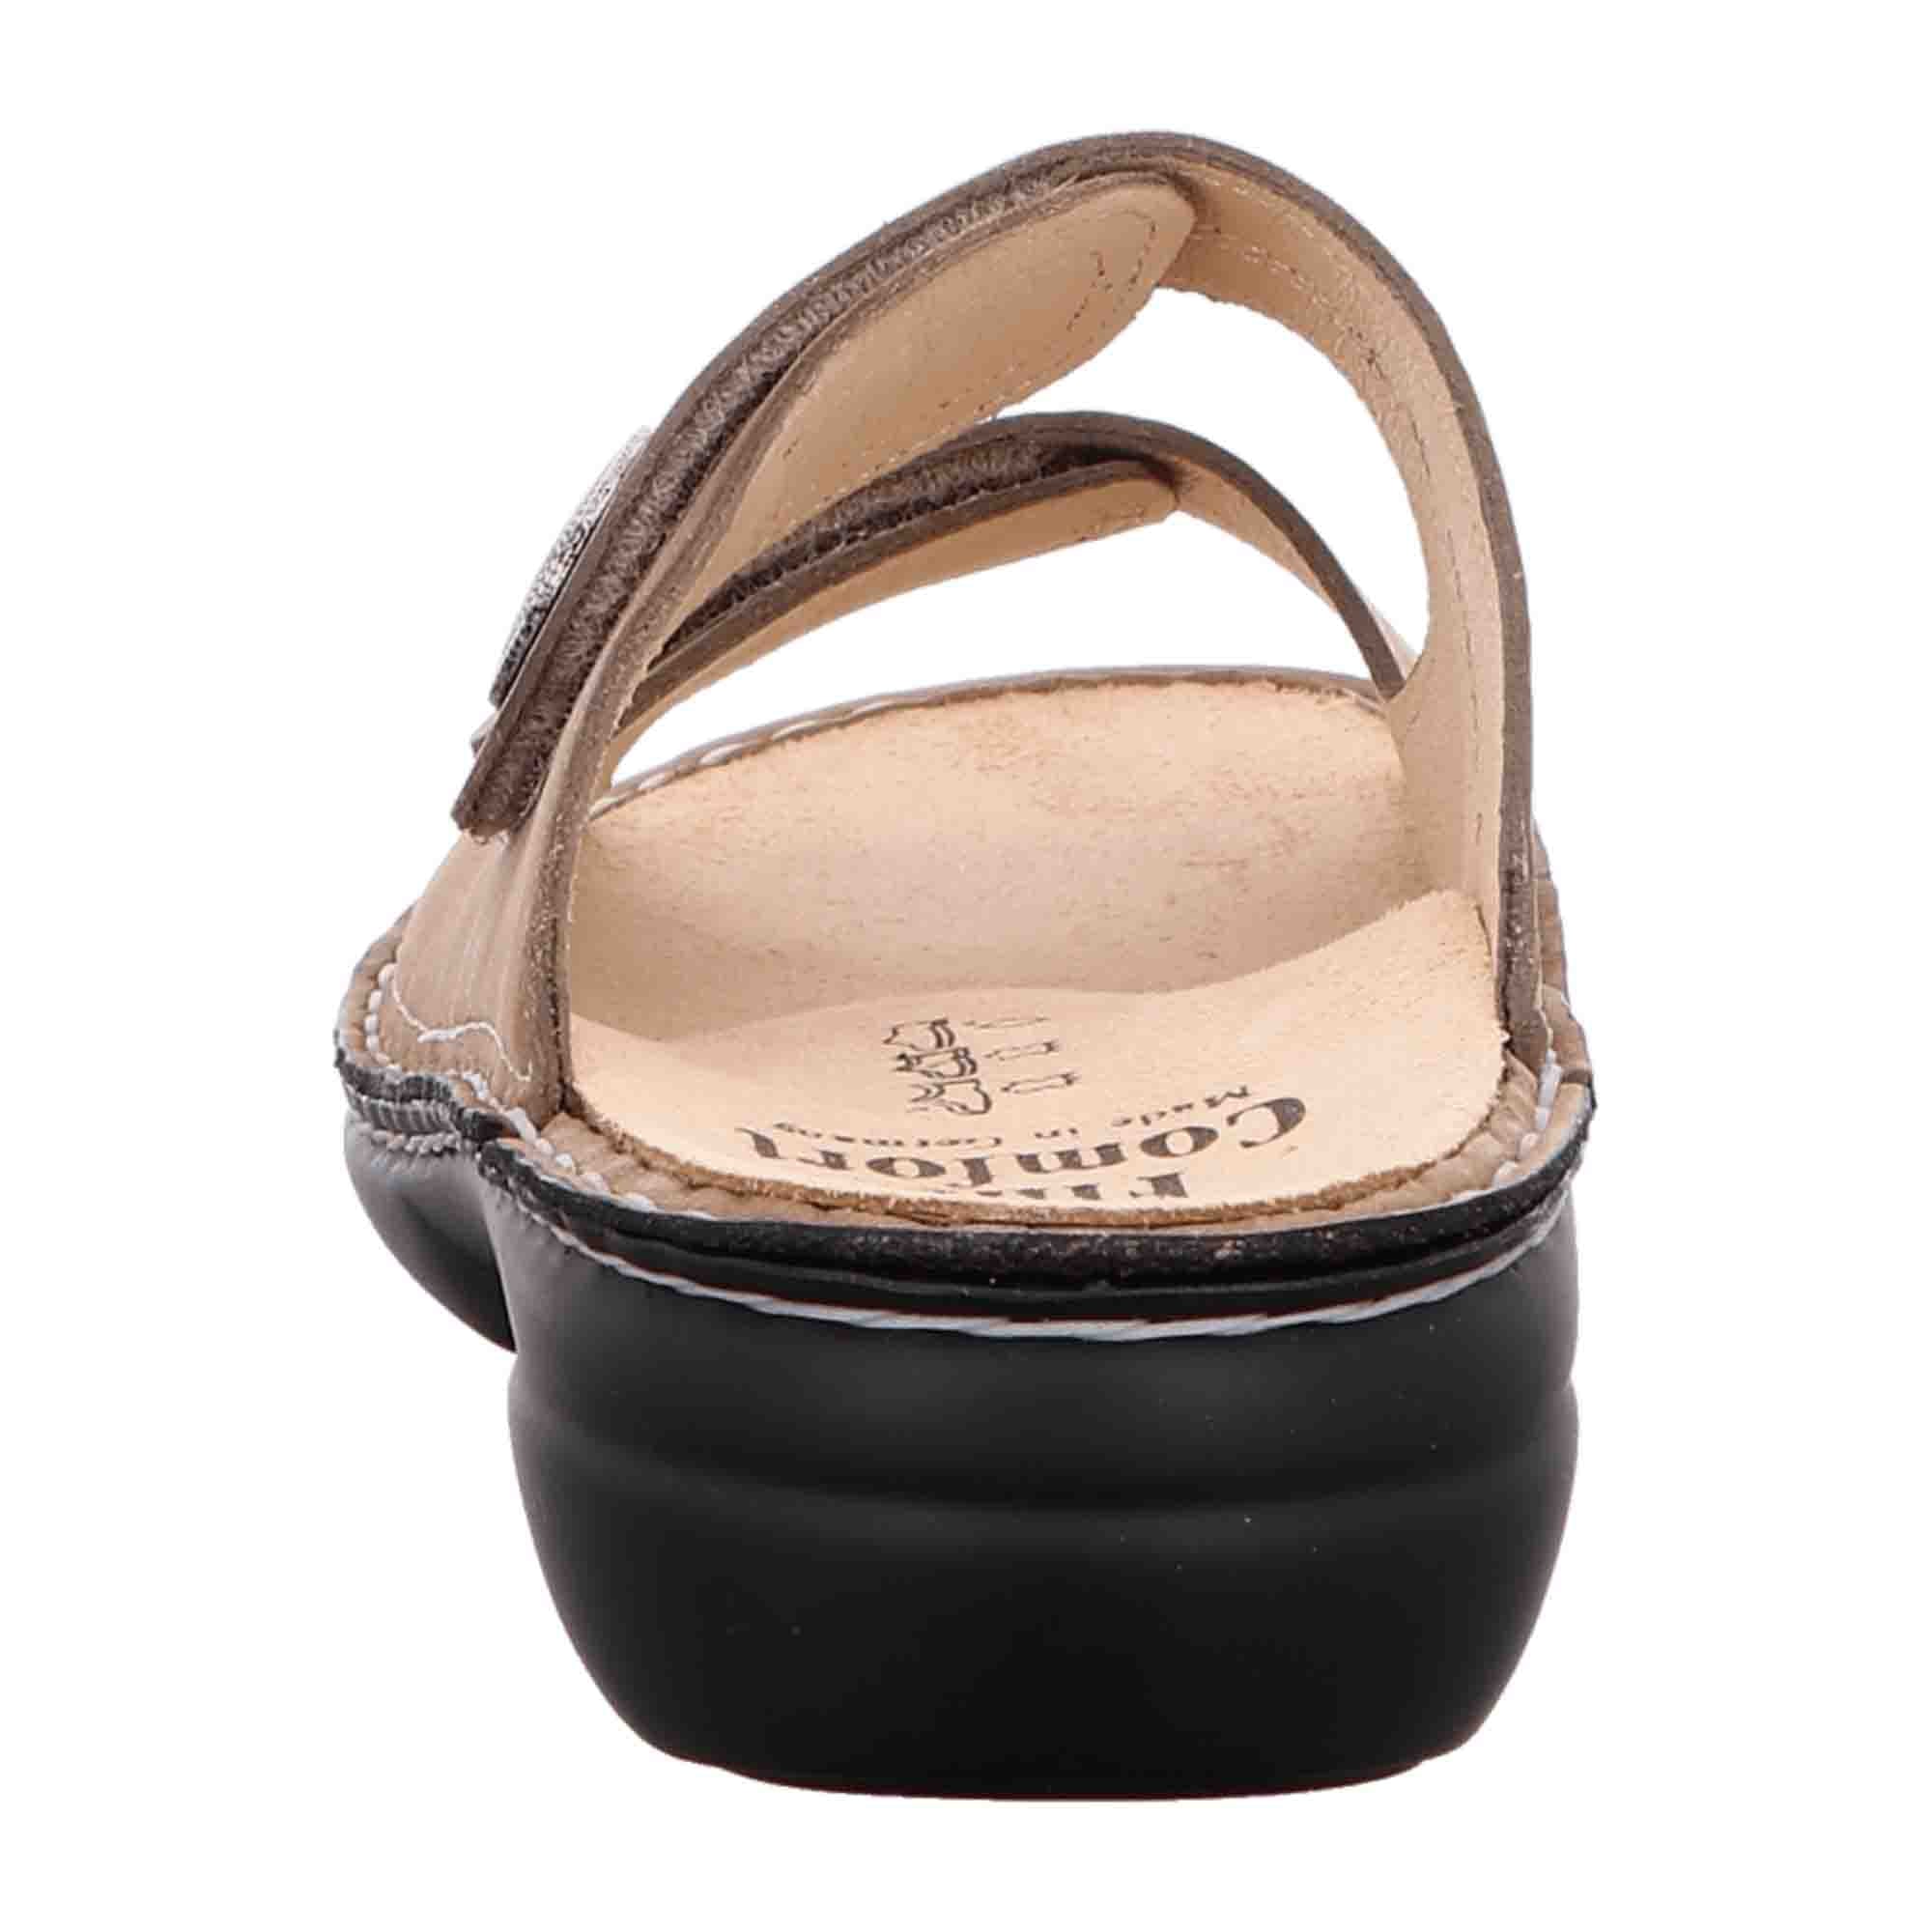 Finn Comfort Women's Comfort Slides, Beige - Stylish & Durable Sandals